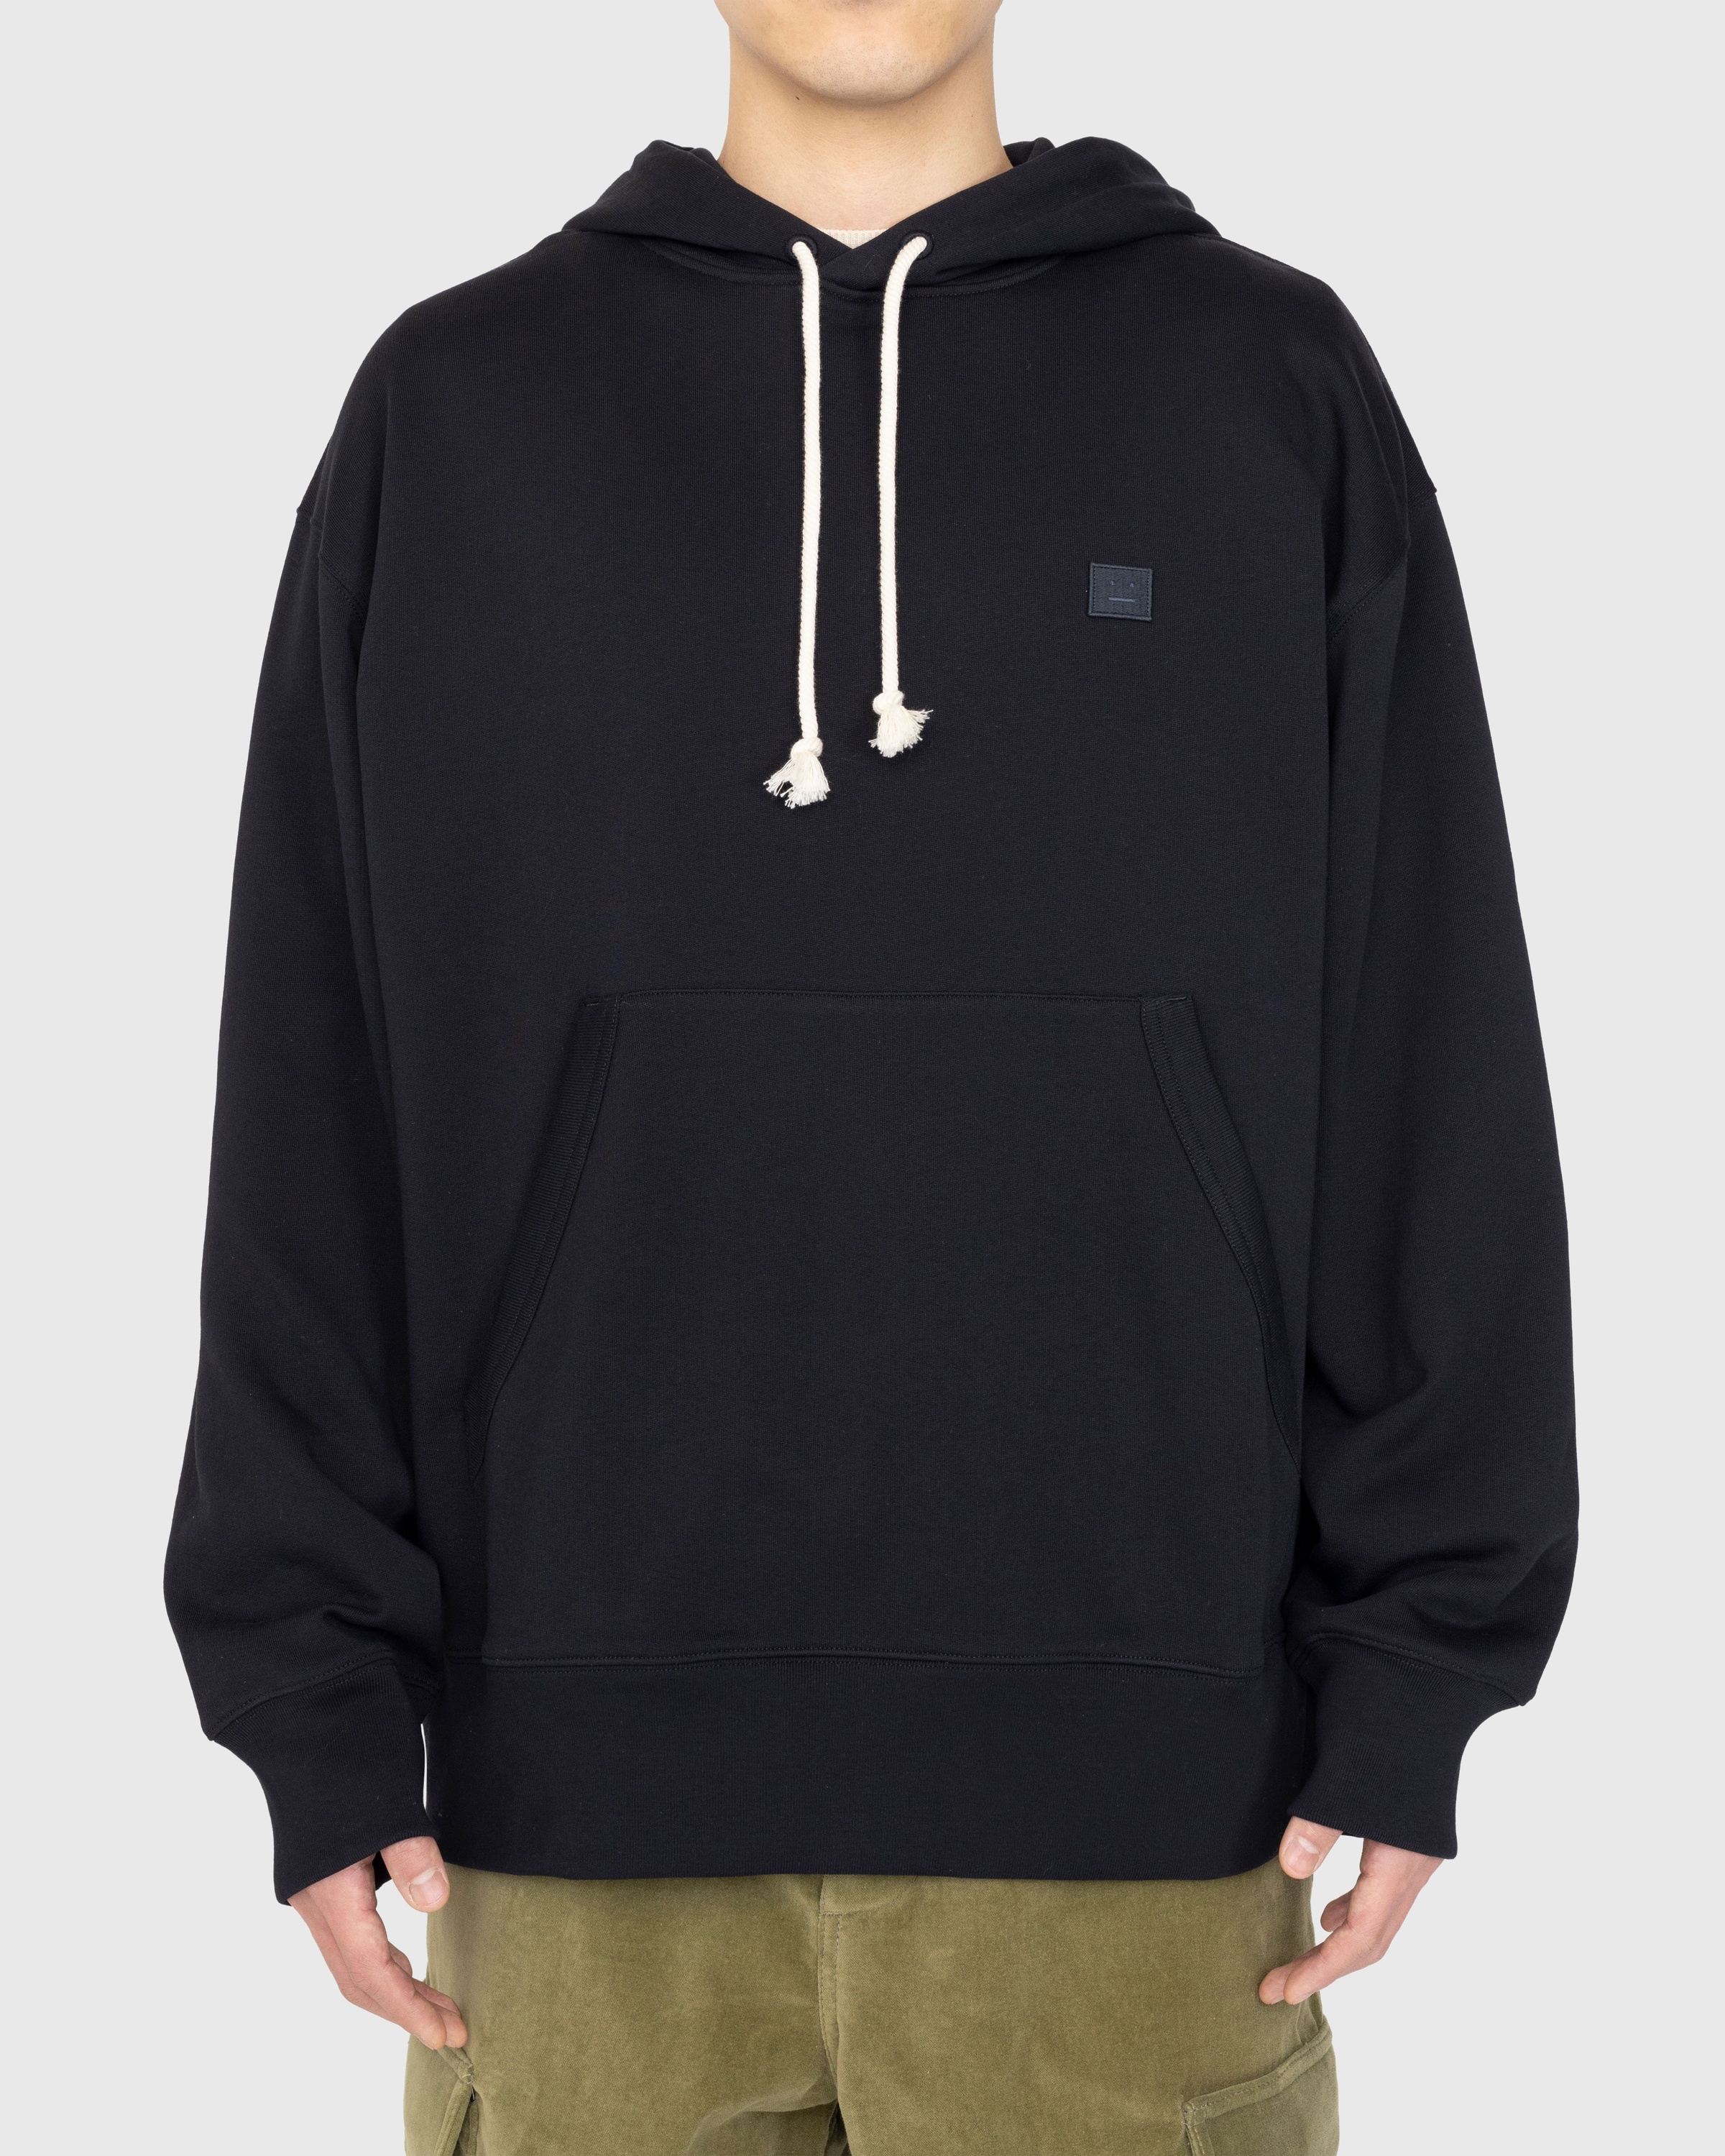 Acne Studios – Organic Cotton Hooded Sweatshirt Black - Sweats - Black - Image 2